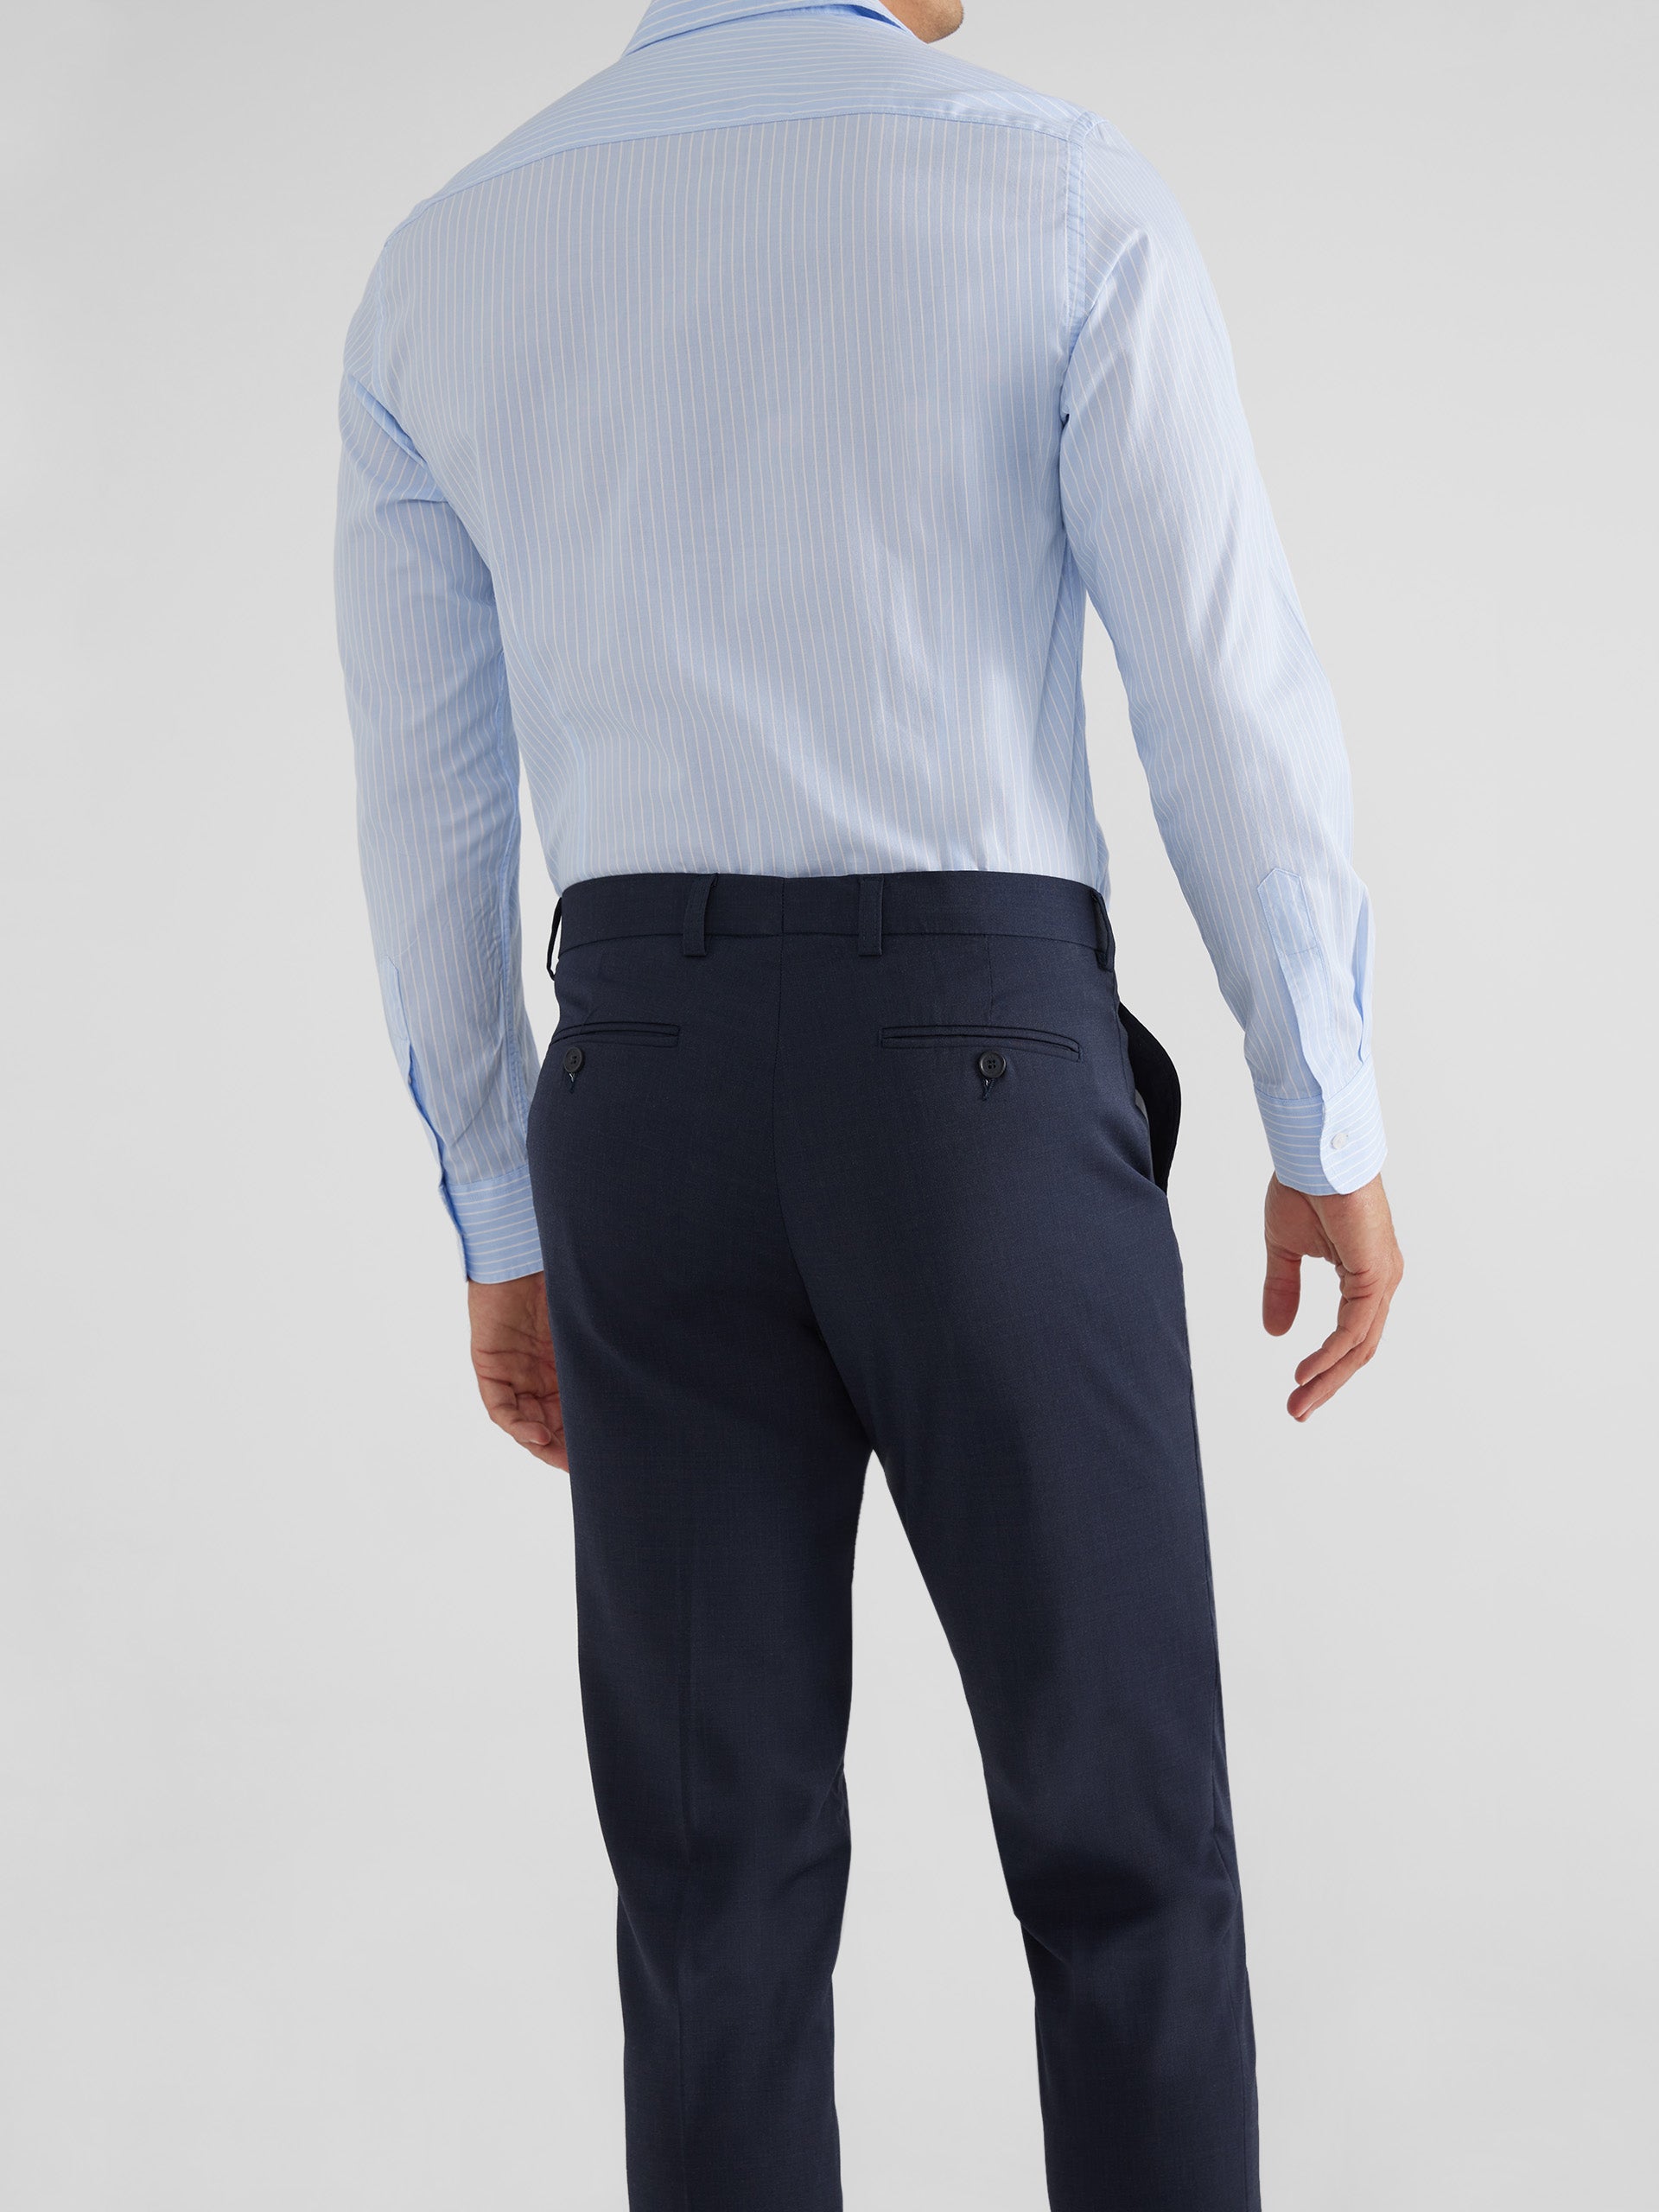 Pantalon vestir classic azul medio